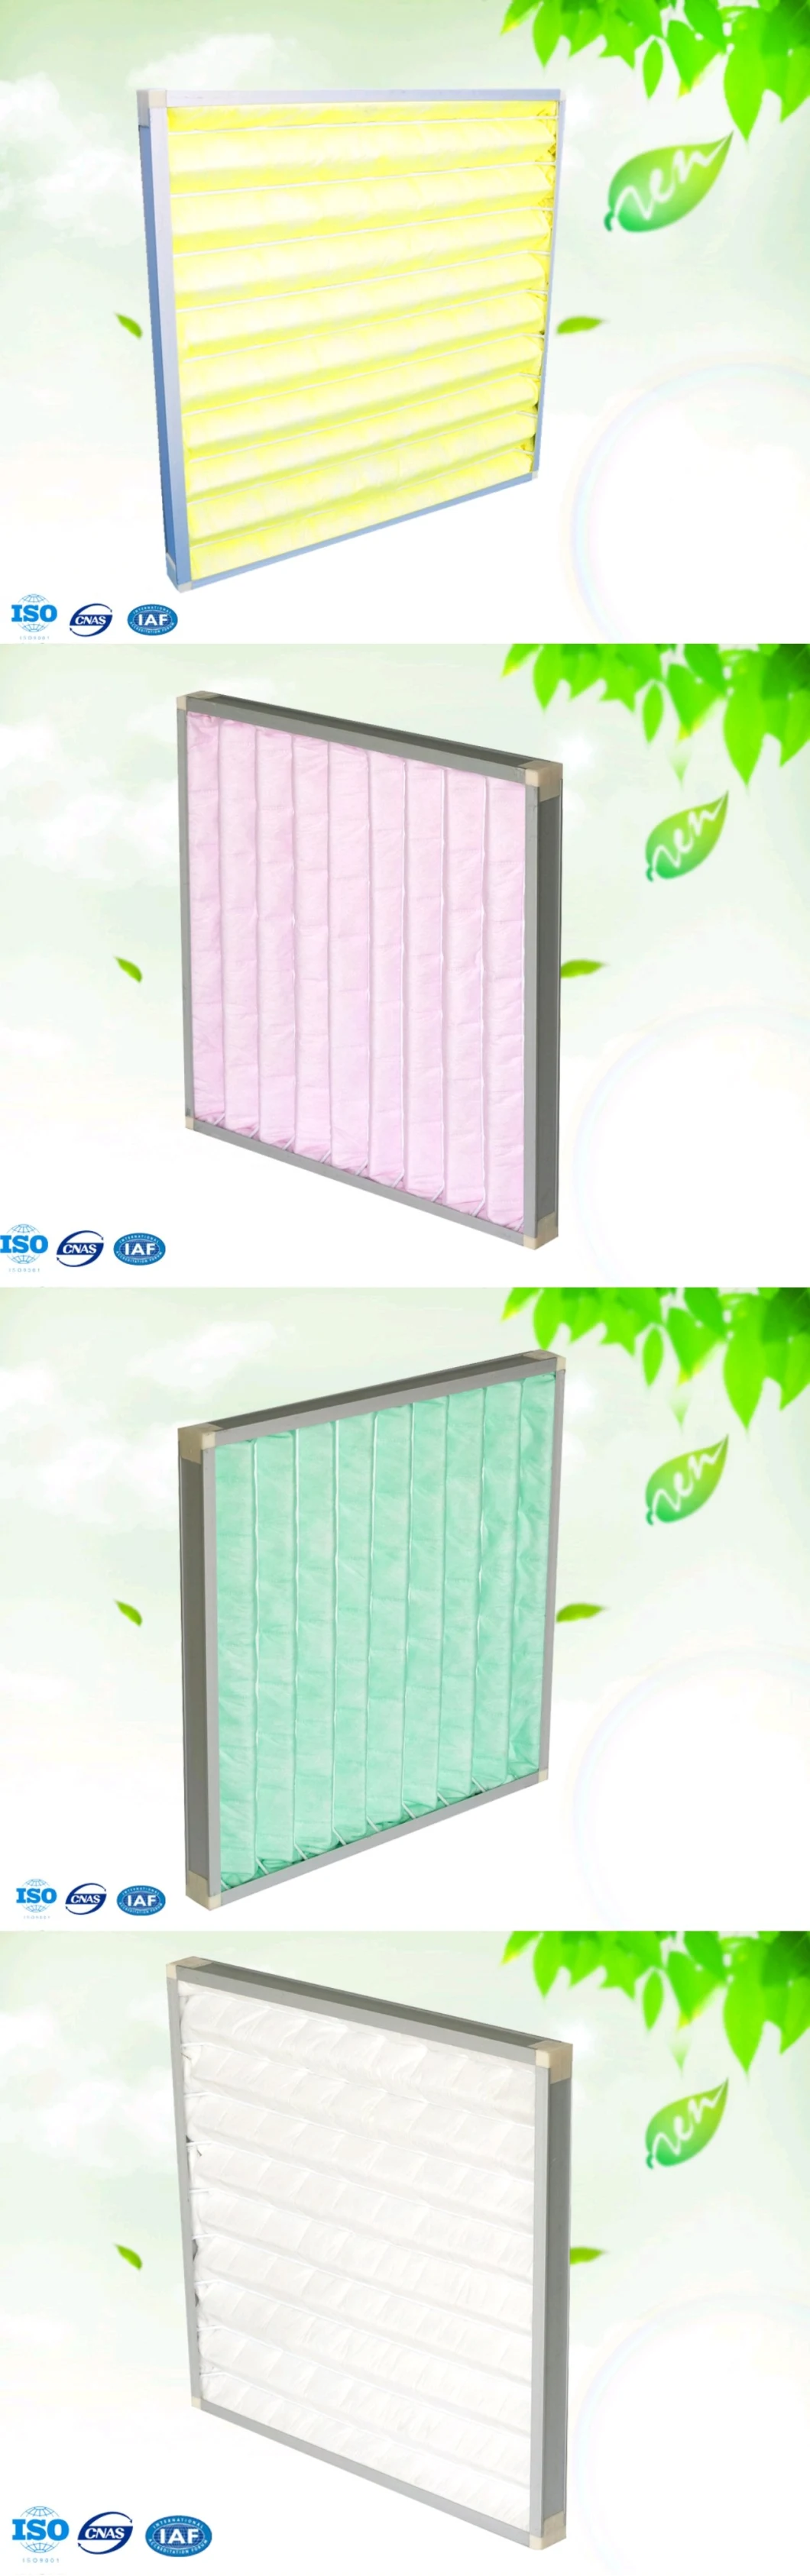 Medium Efficiency Skeleton Panel Air Filter for Central Air Conditioning Ventilation System